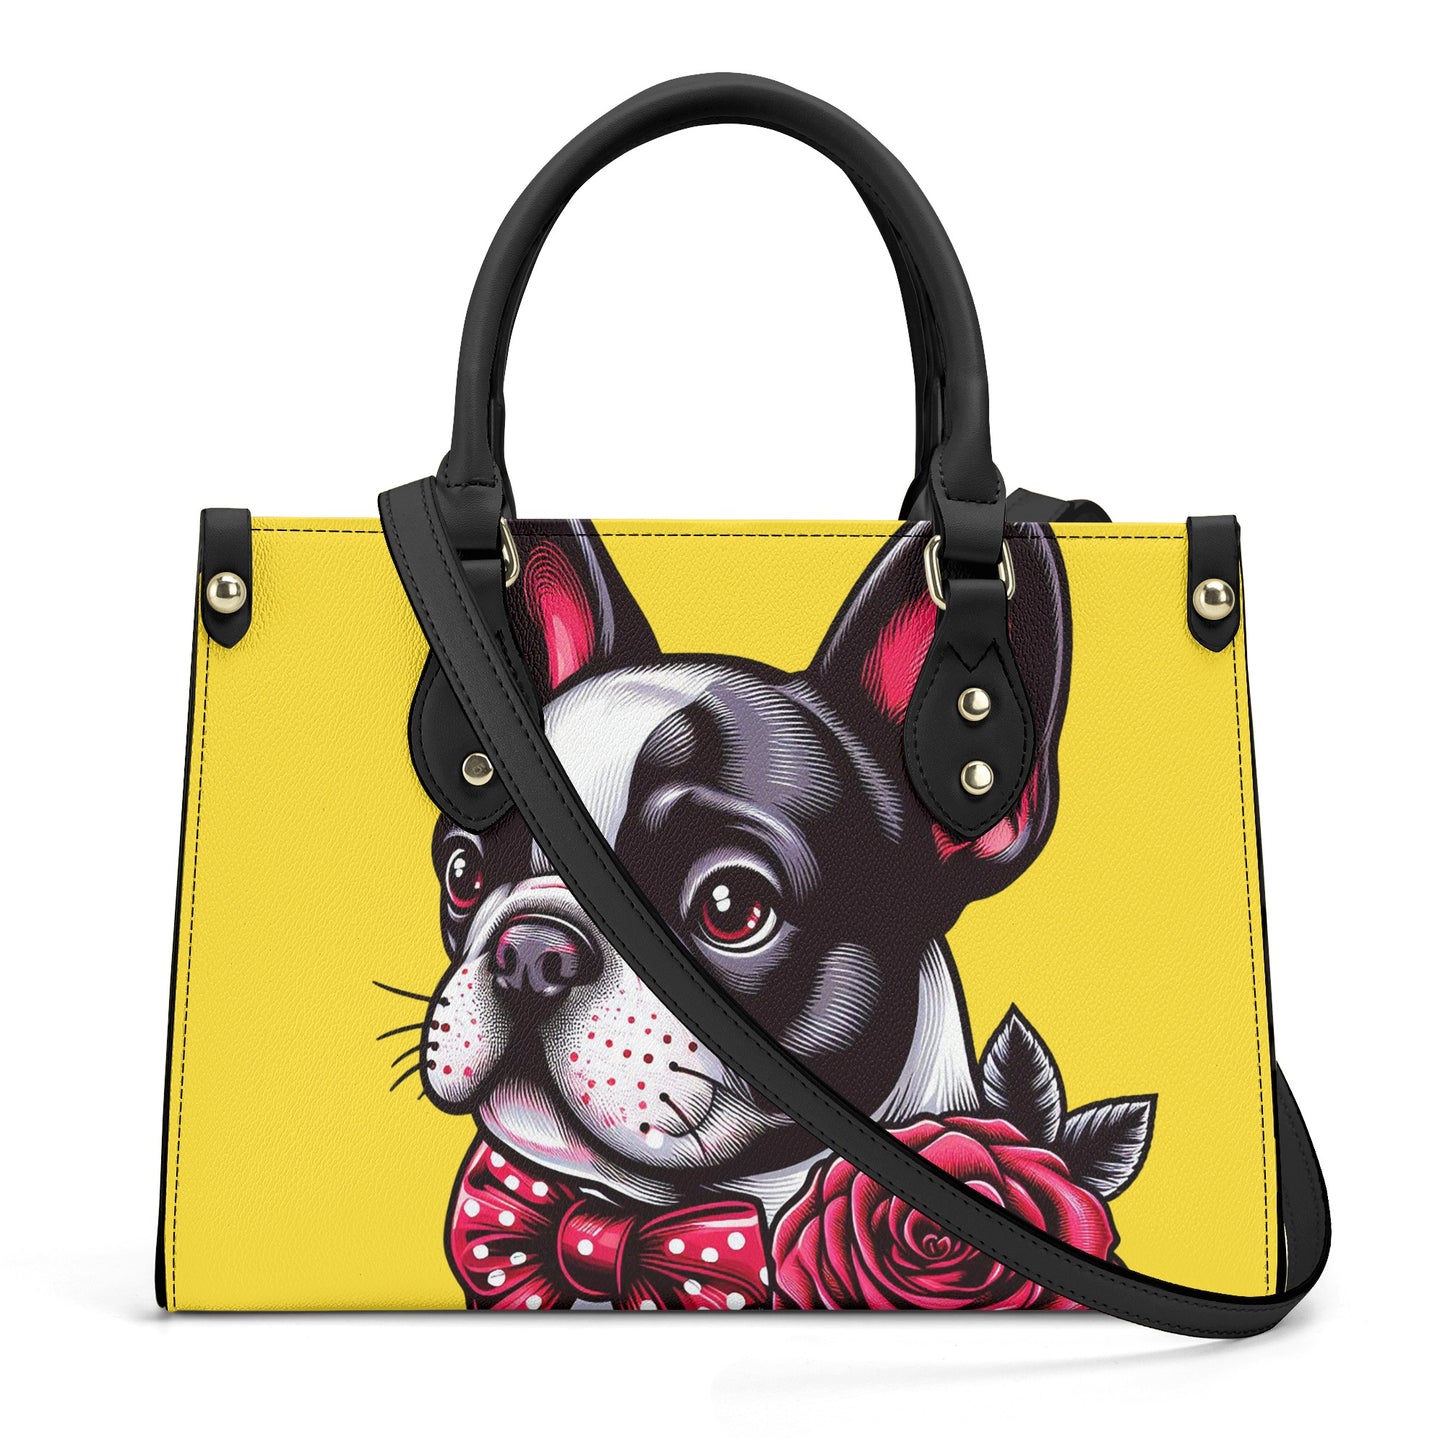 Coco - Luxury Women Handbag